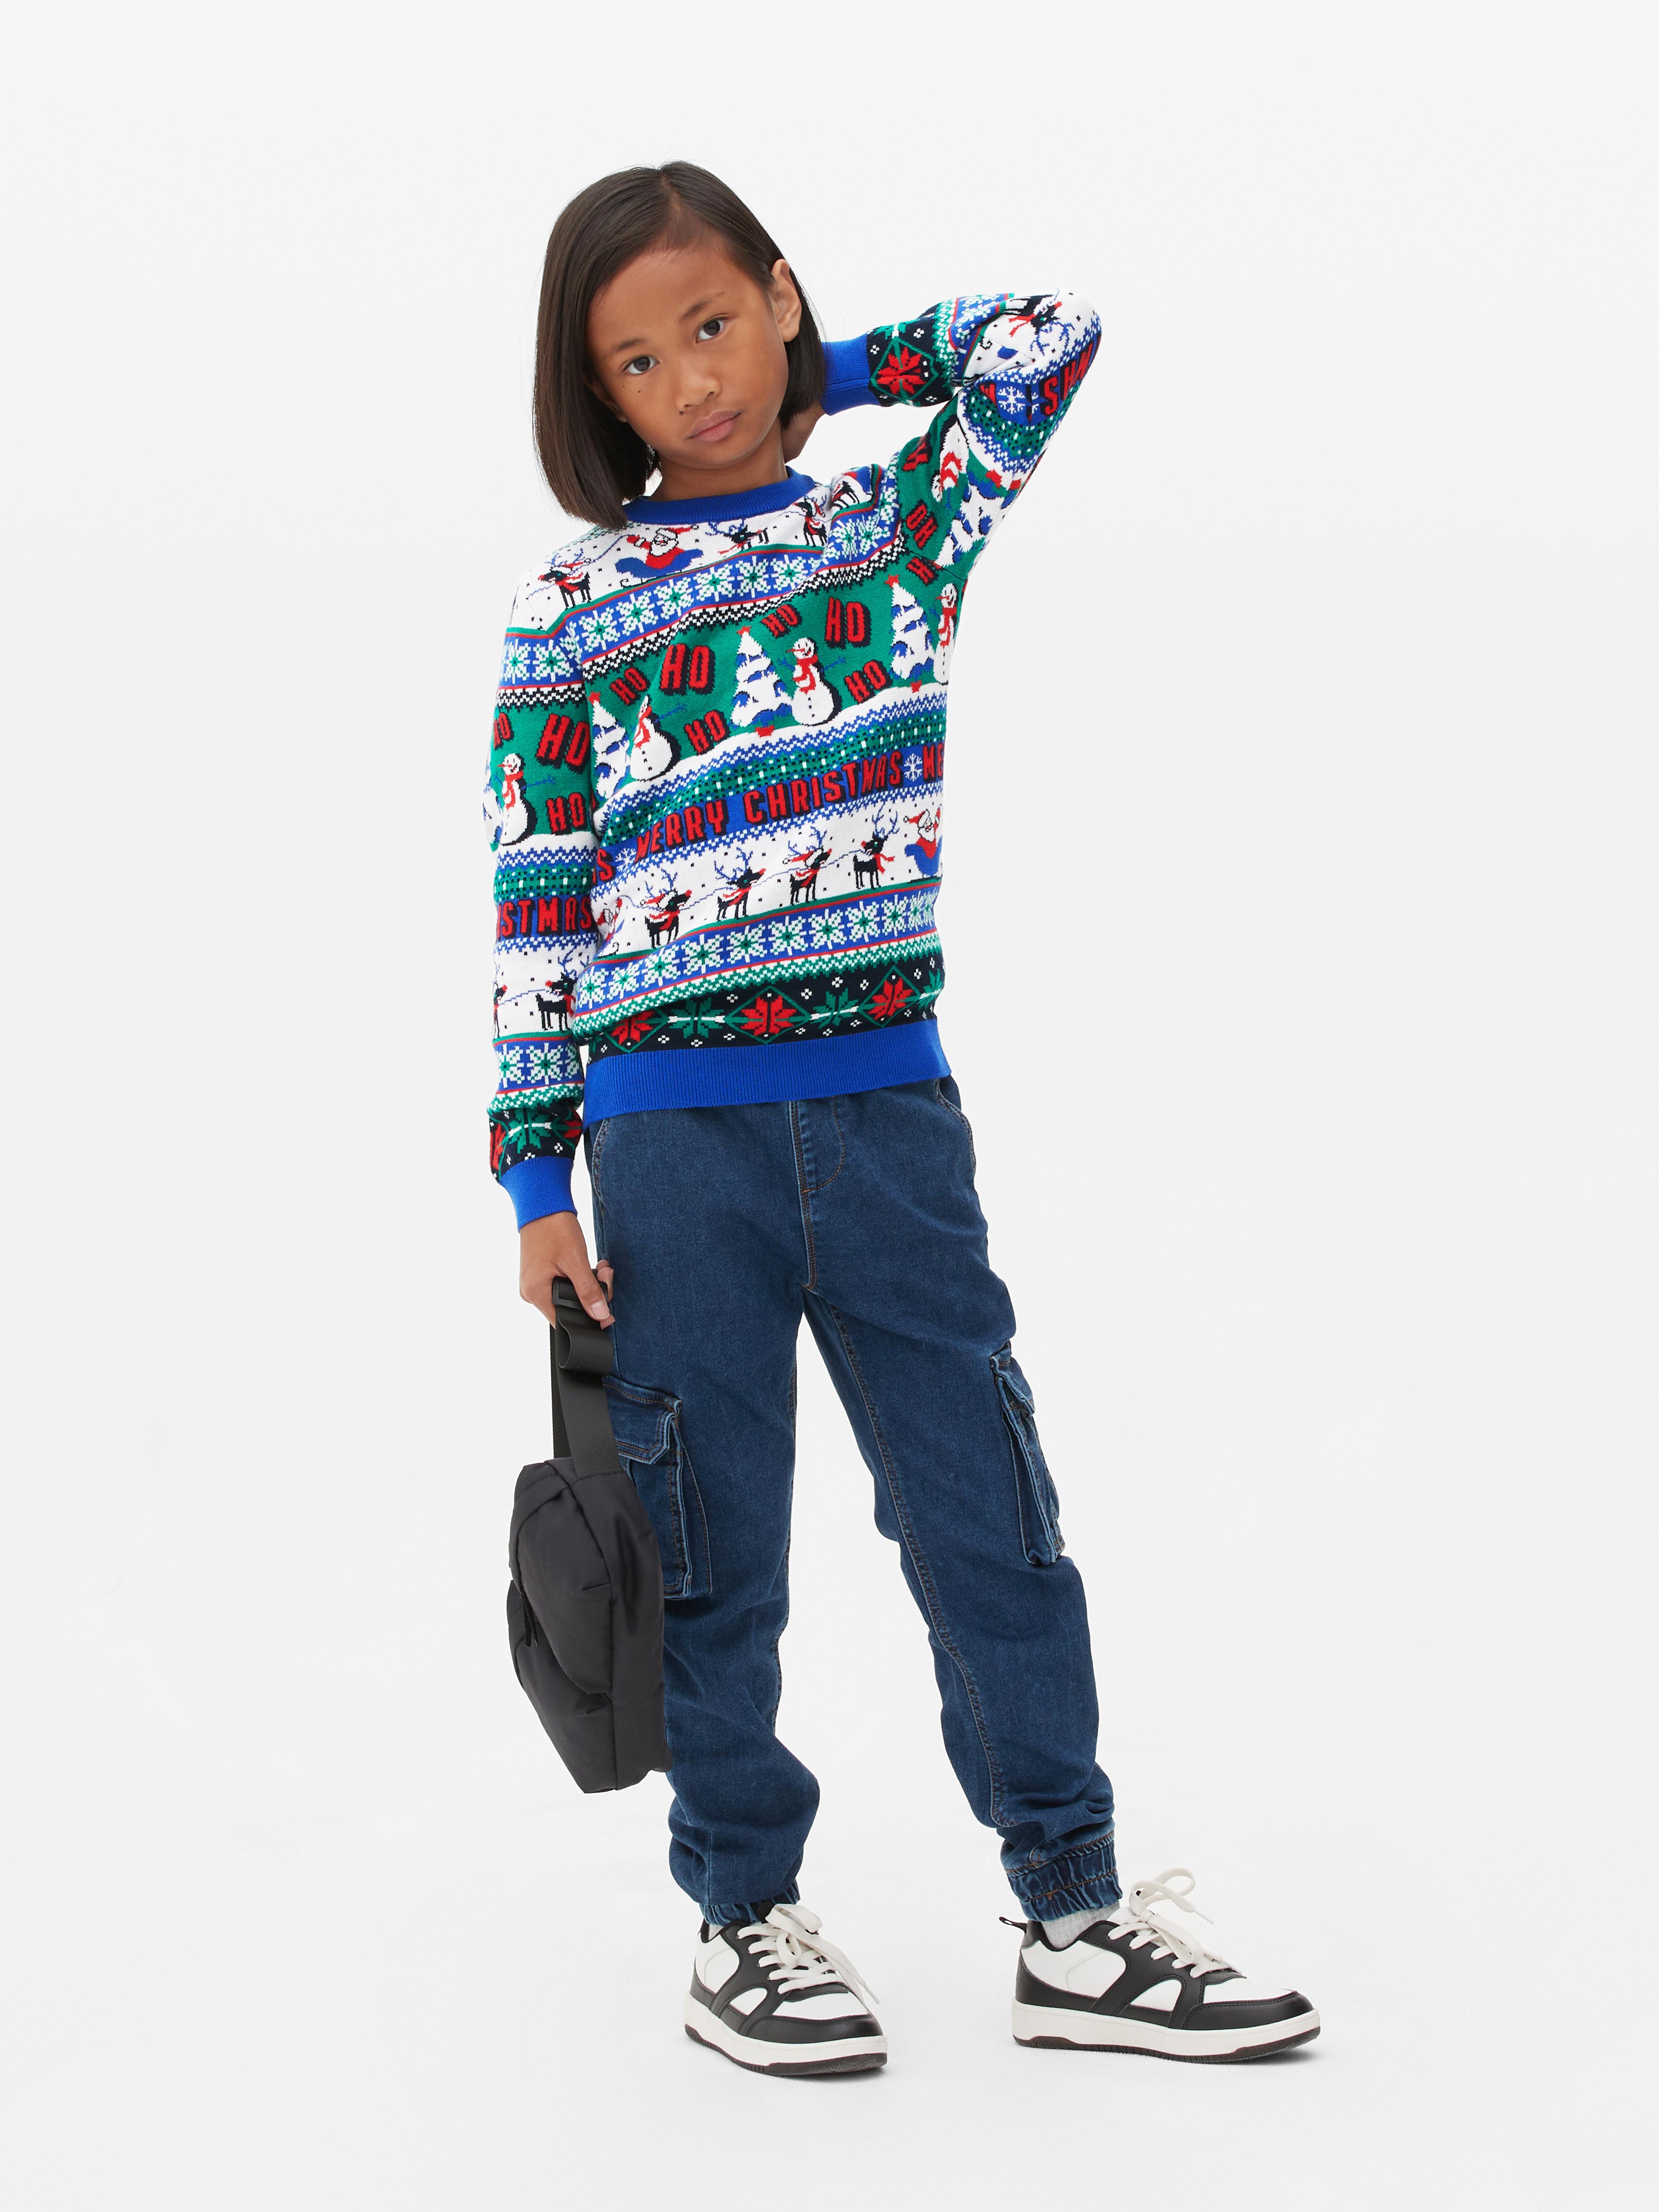 Kids' Christmas Sweater